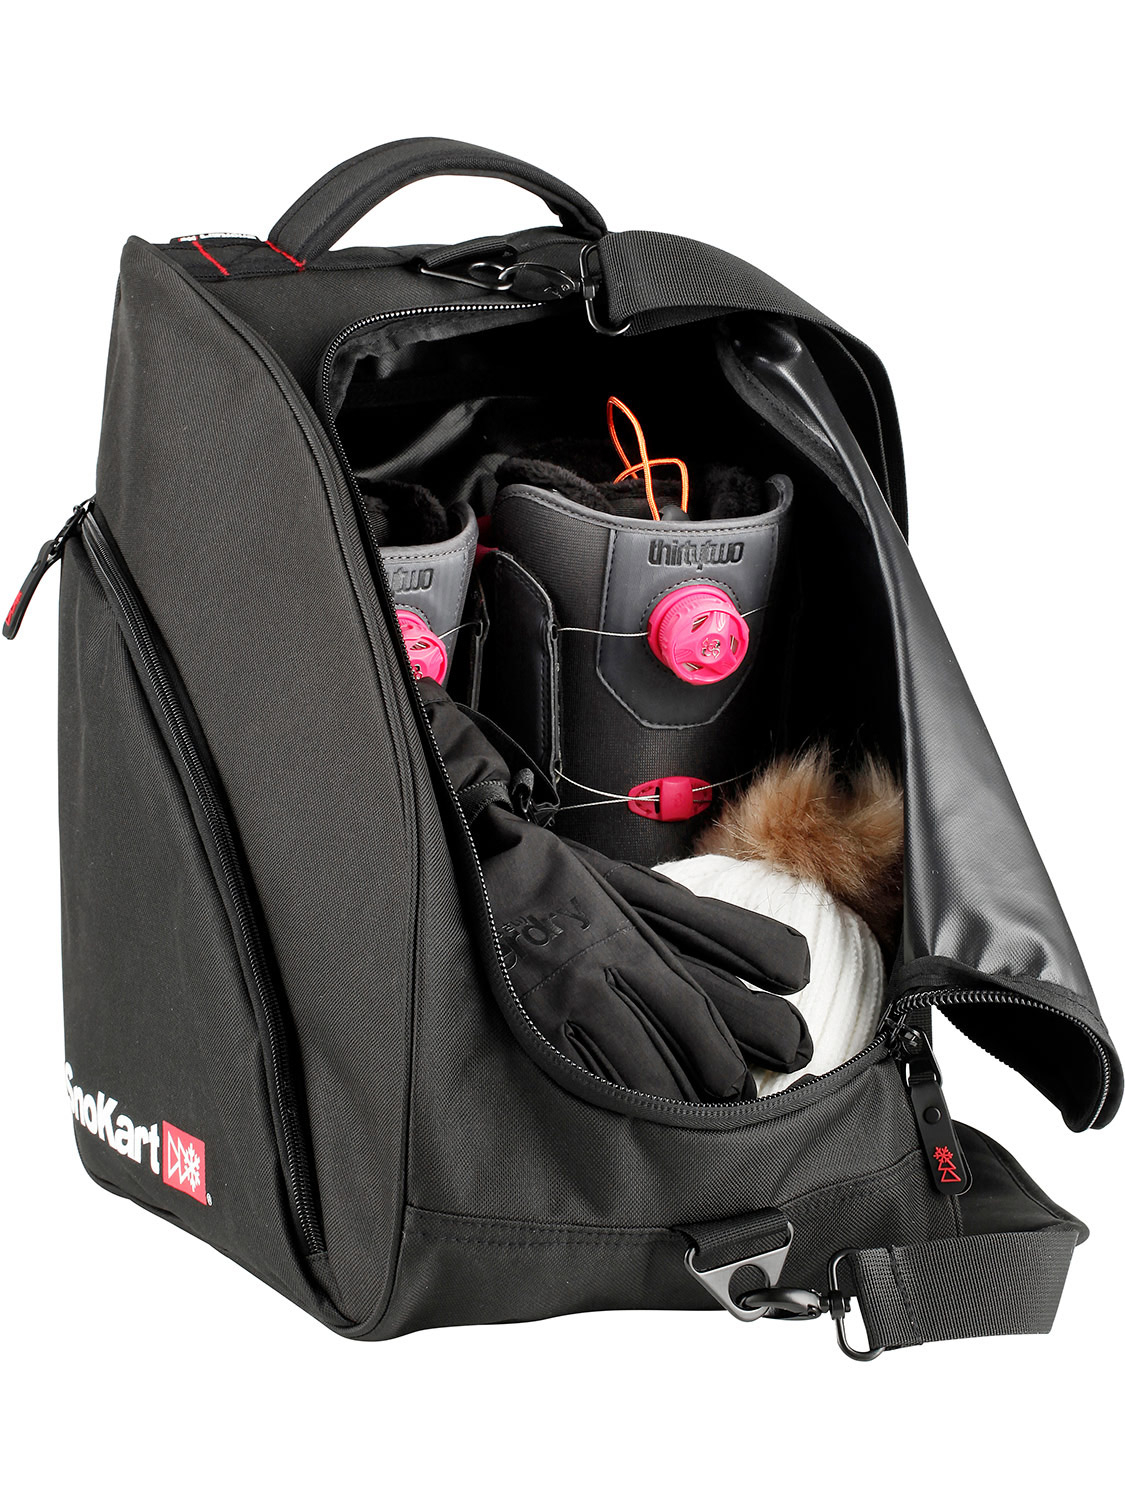 Snokart Classik Boot Bag Black - Size: ONE